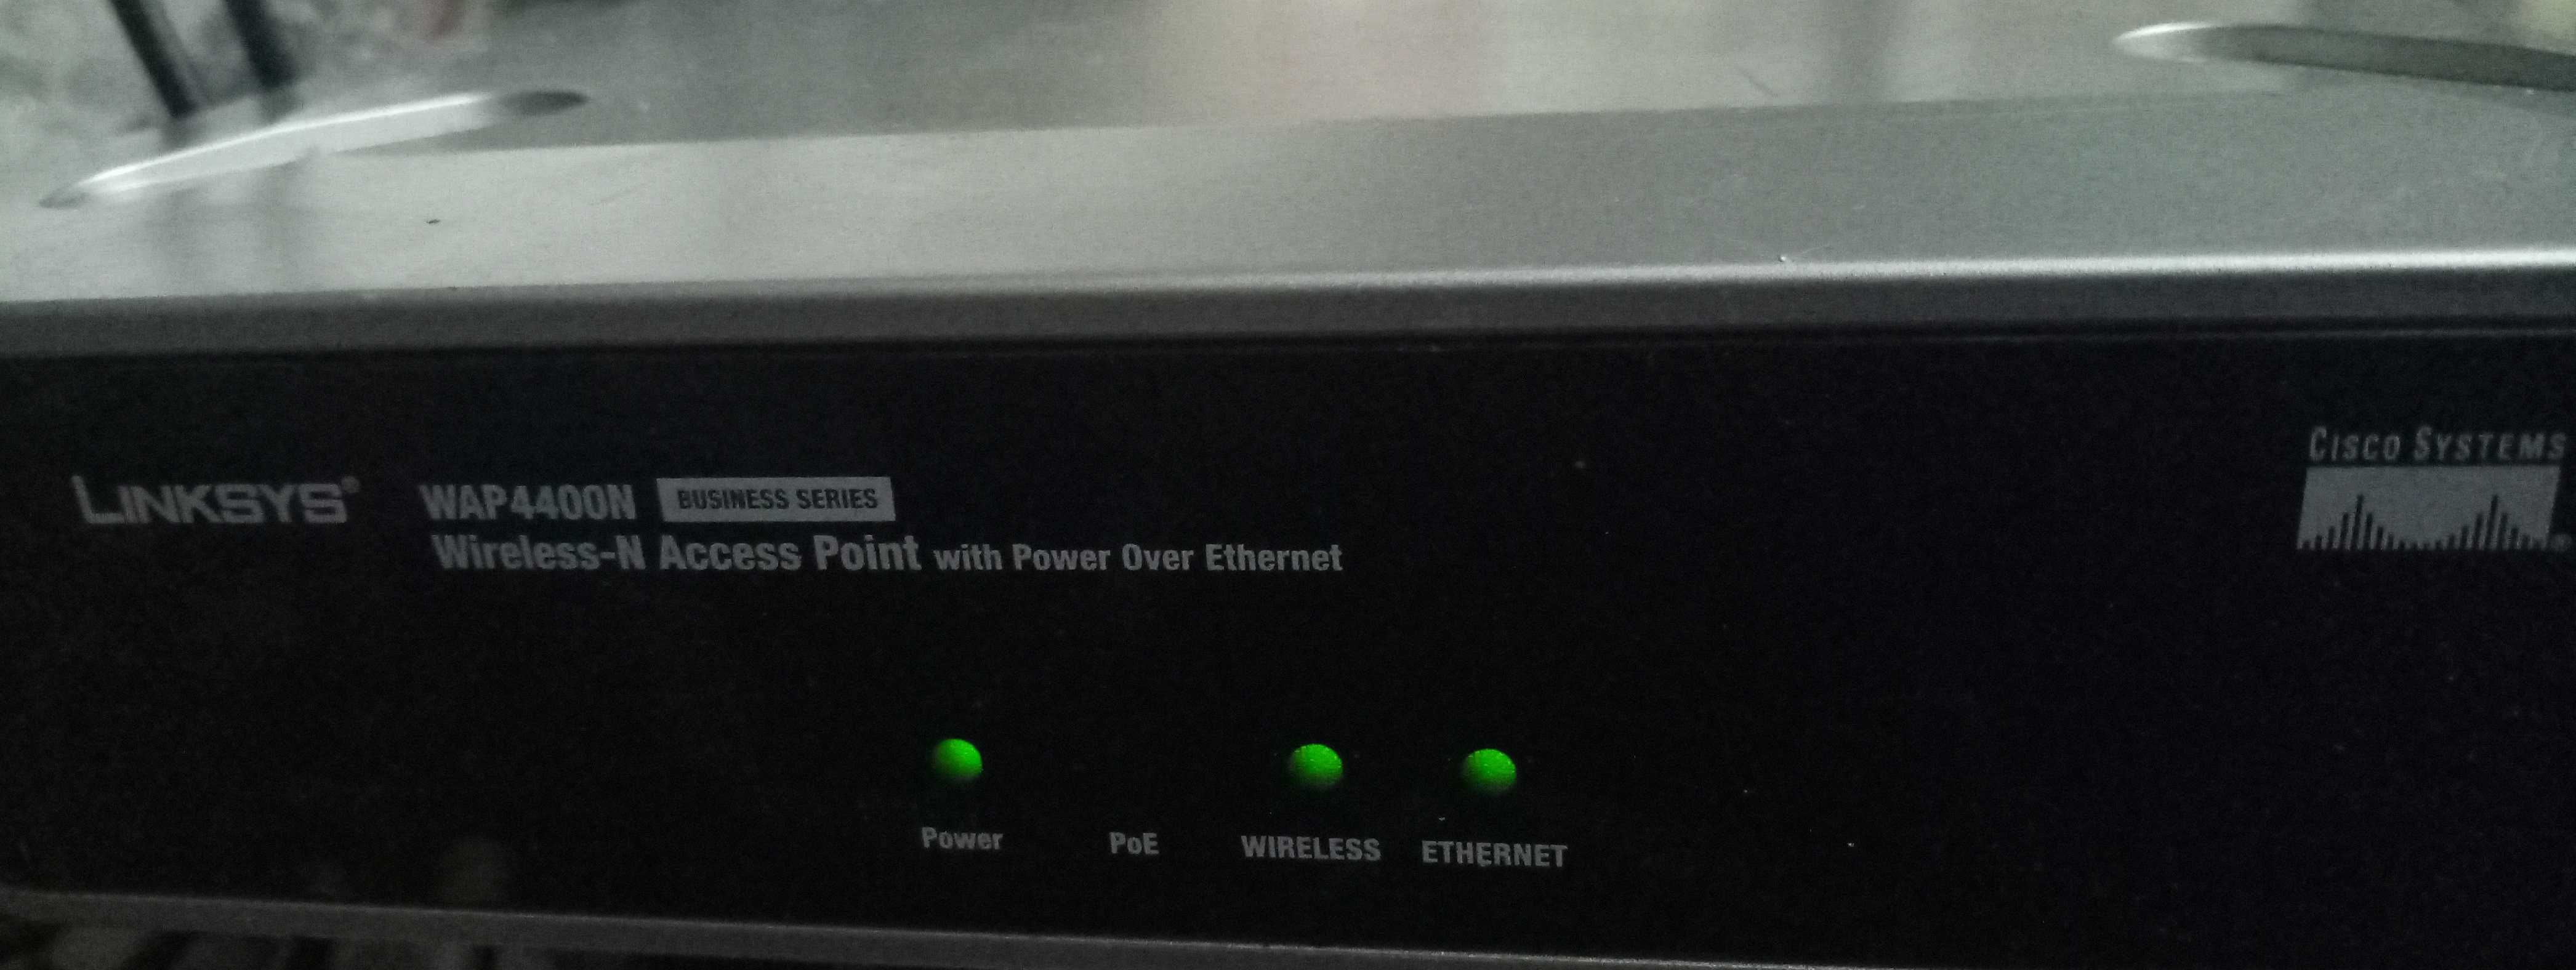 Мощный Wi-Fi роутер  Linksys (Cisco) WAP4400N  с PoE